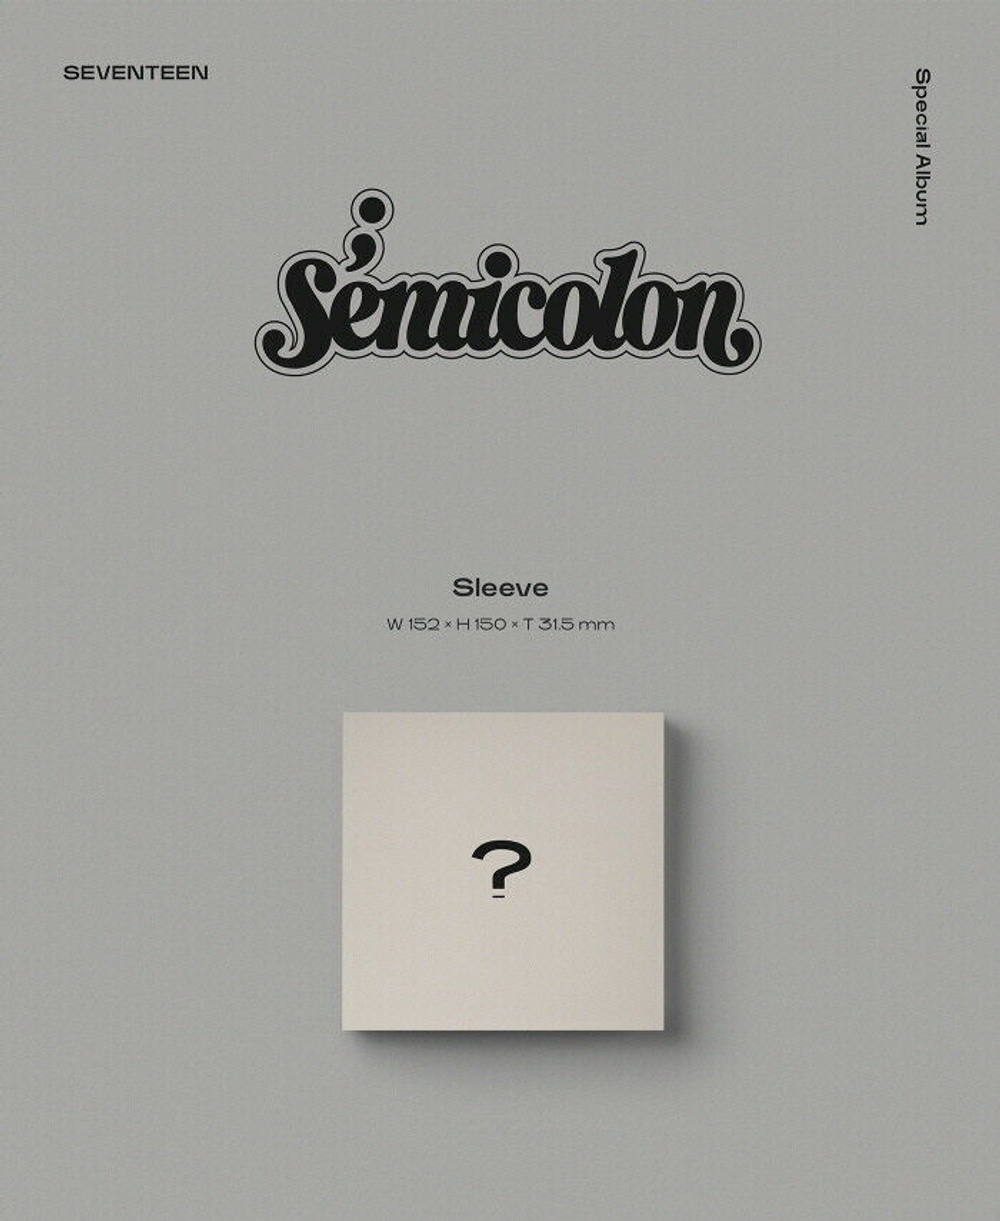 SEVENTEEN - ; Semicolon